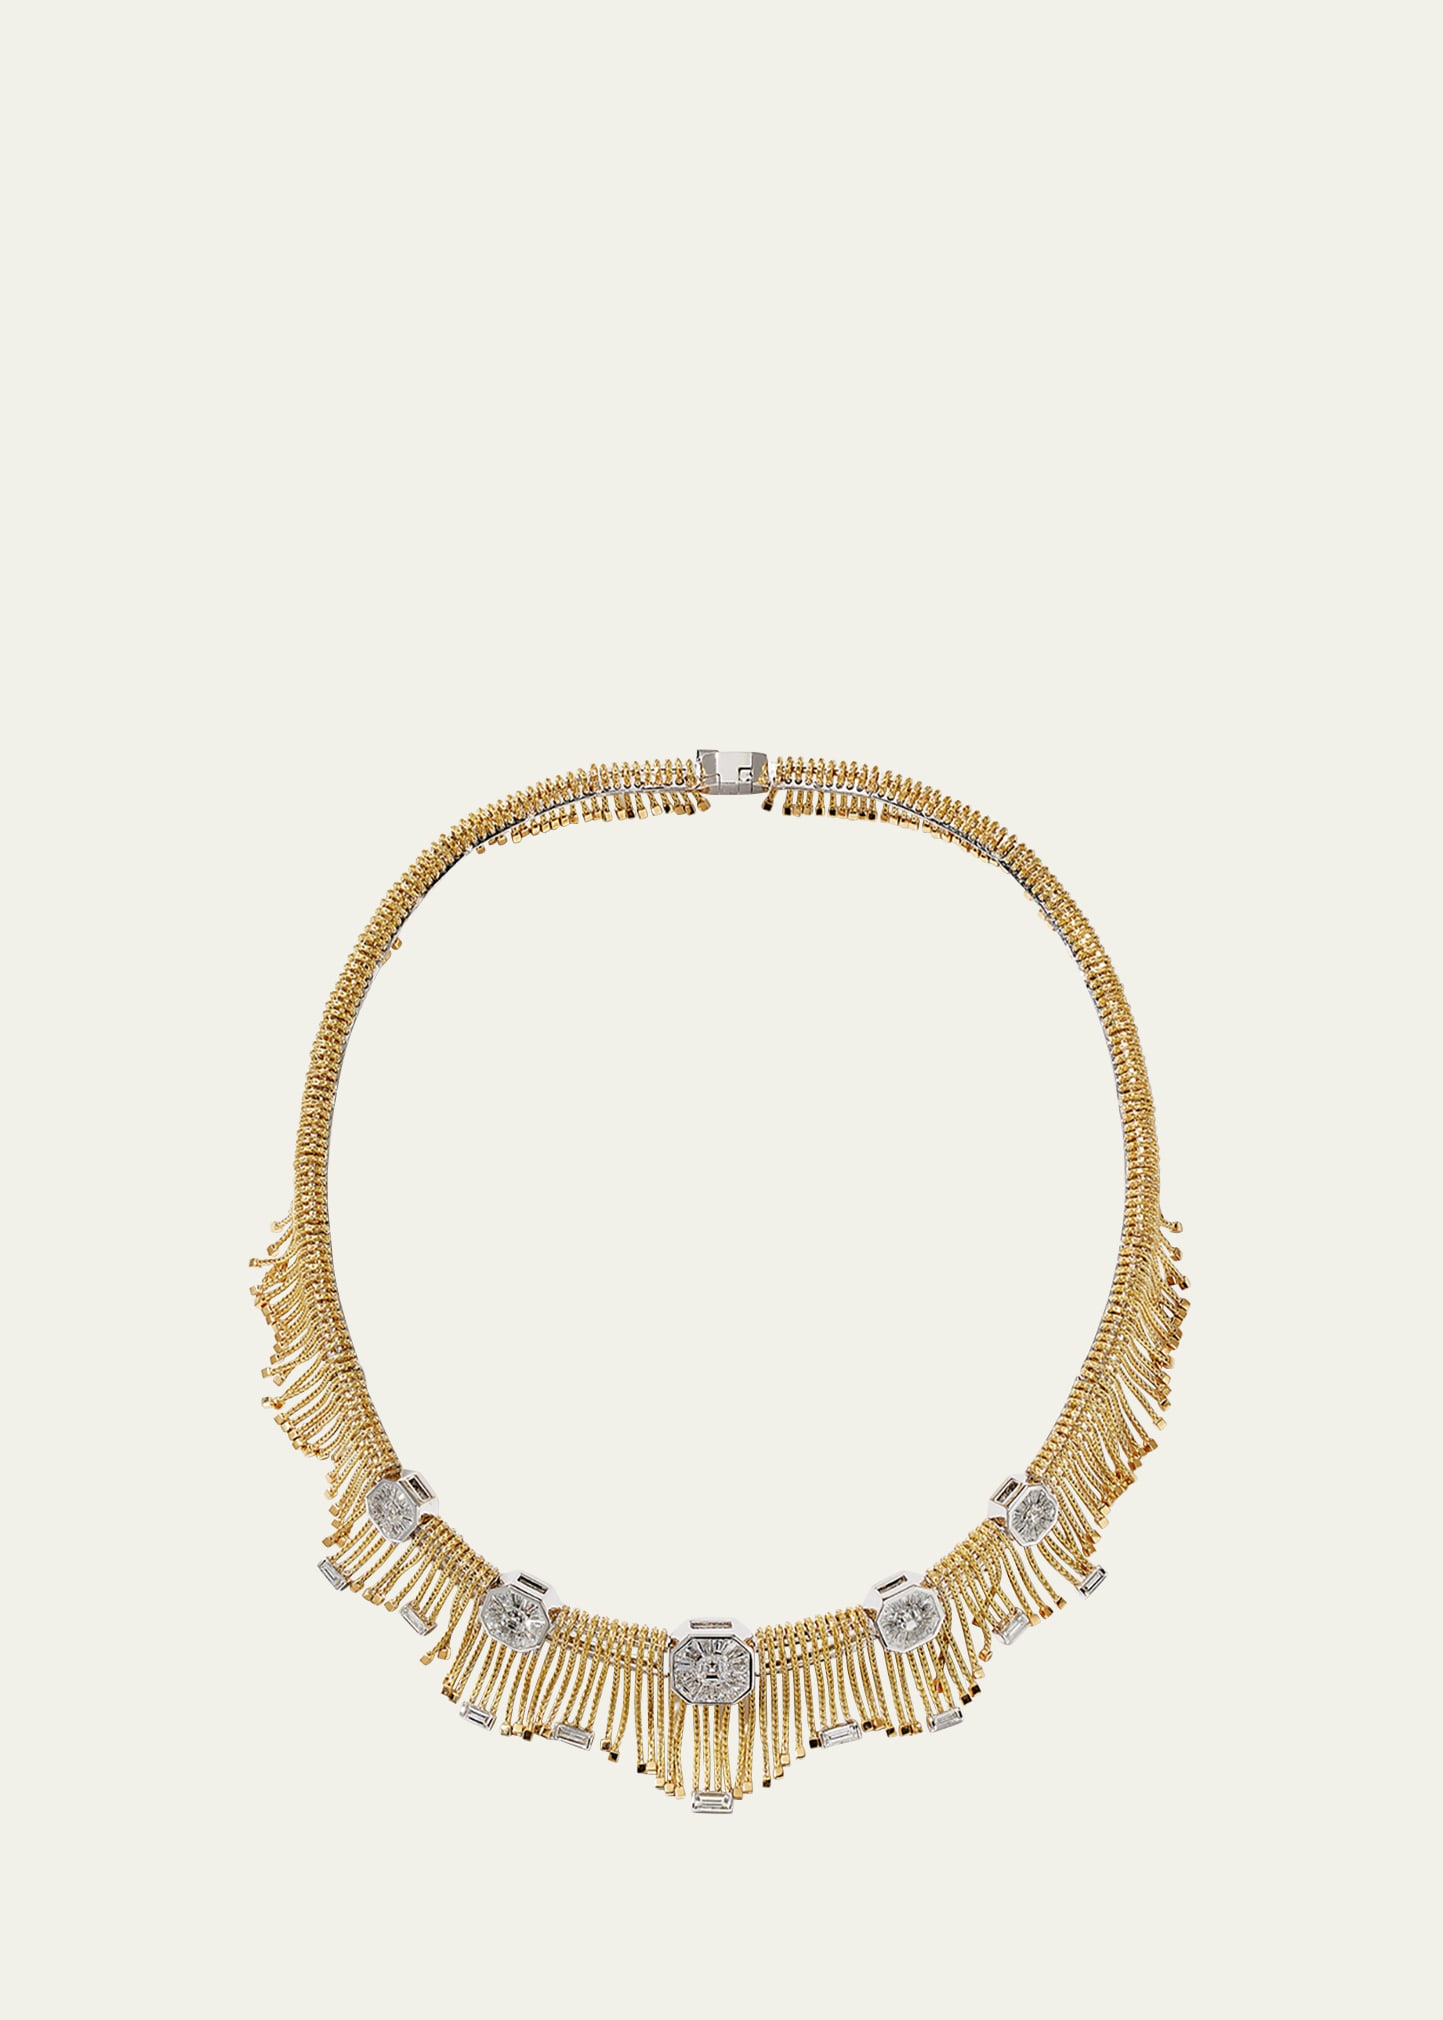 lui jewelry Knit02 beige-